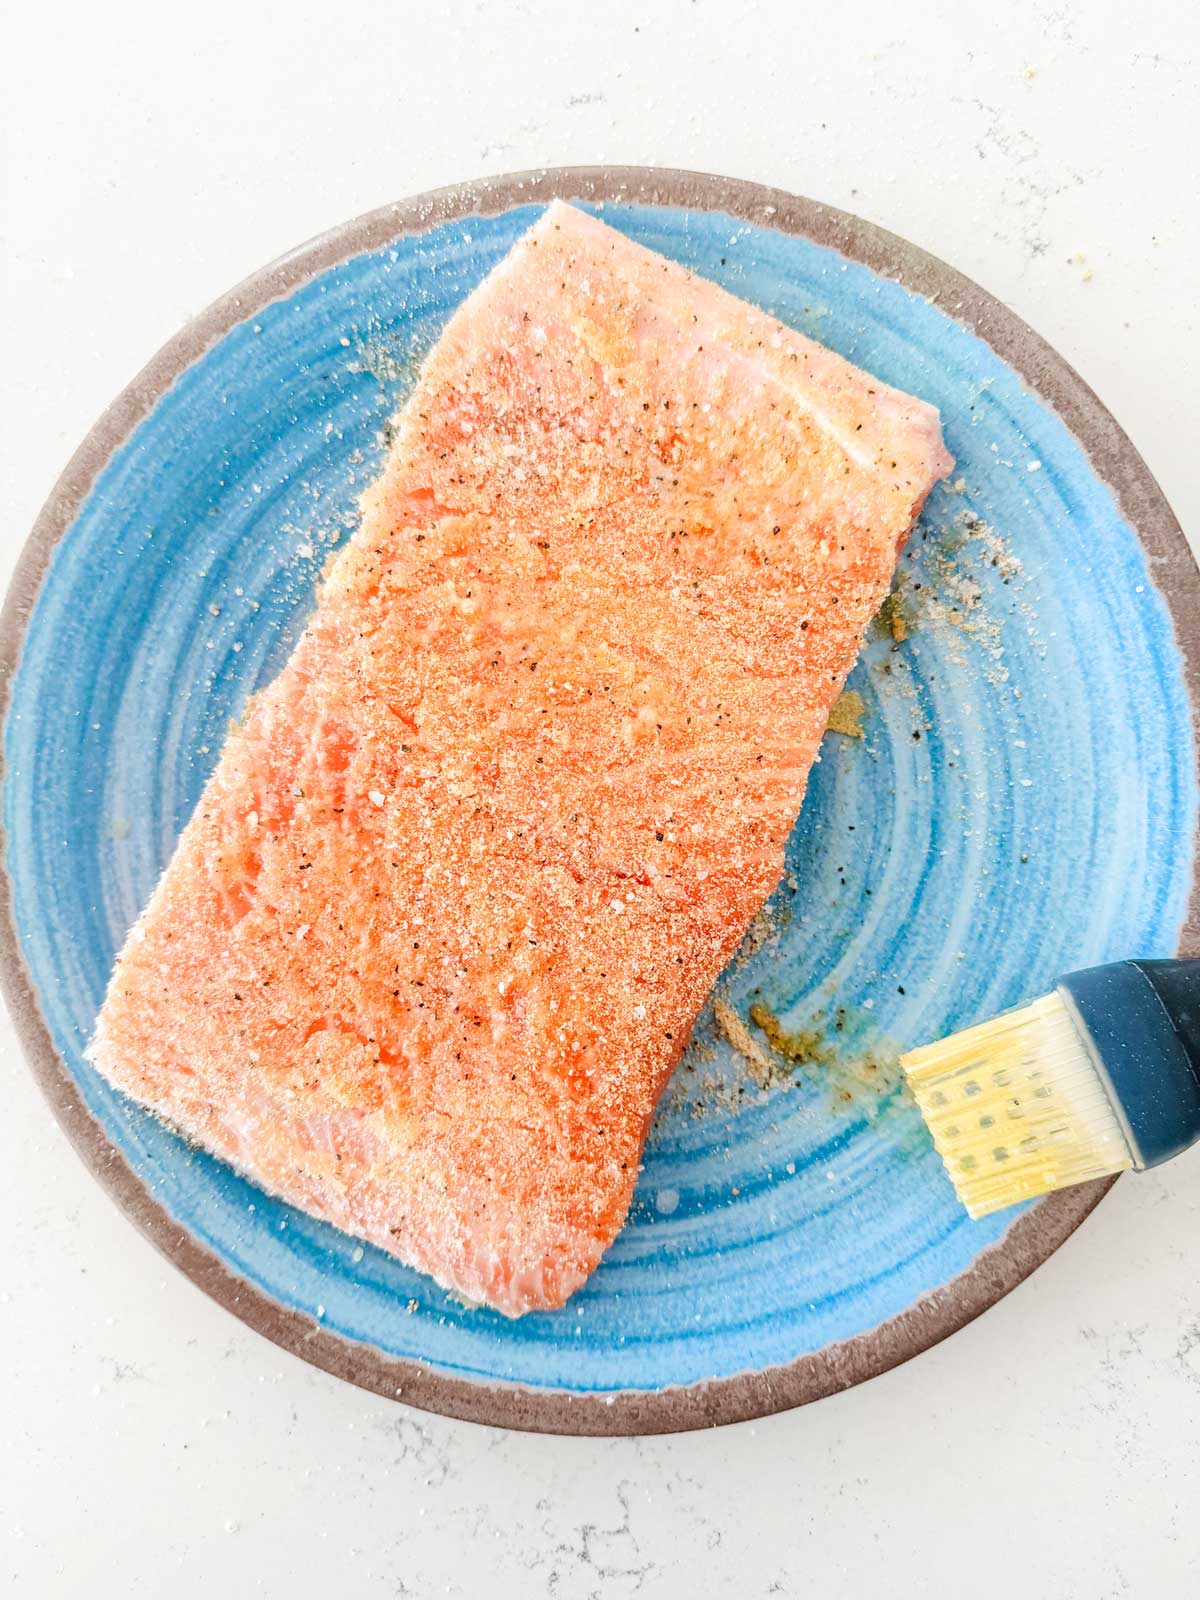 Seasoned salmon sitting on a light blue plate.